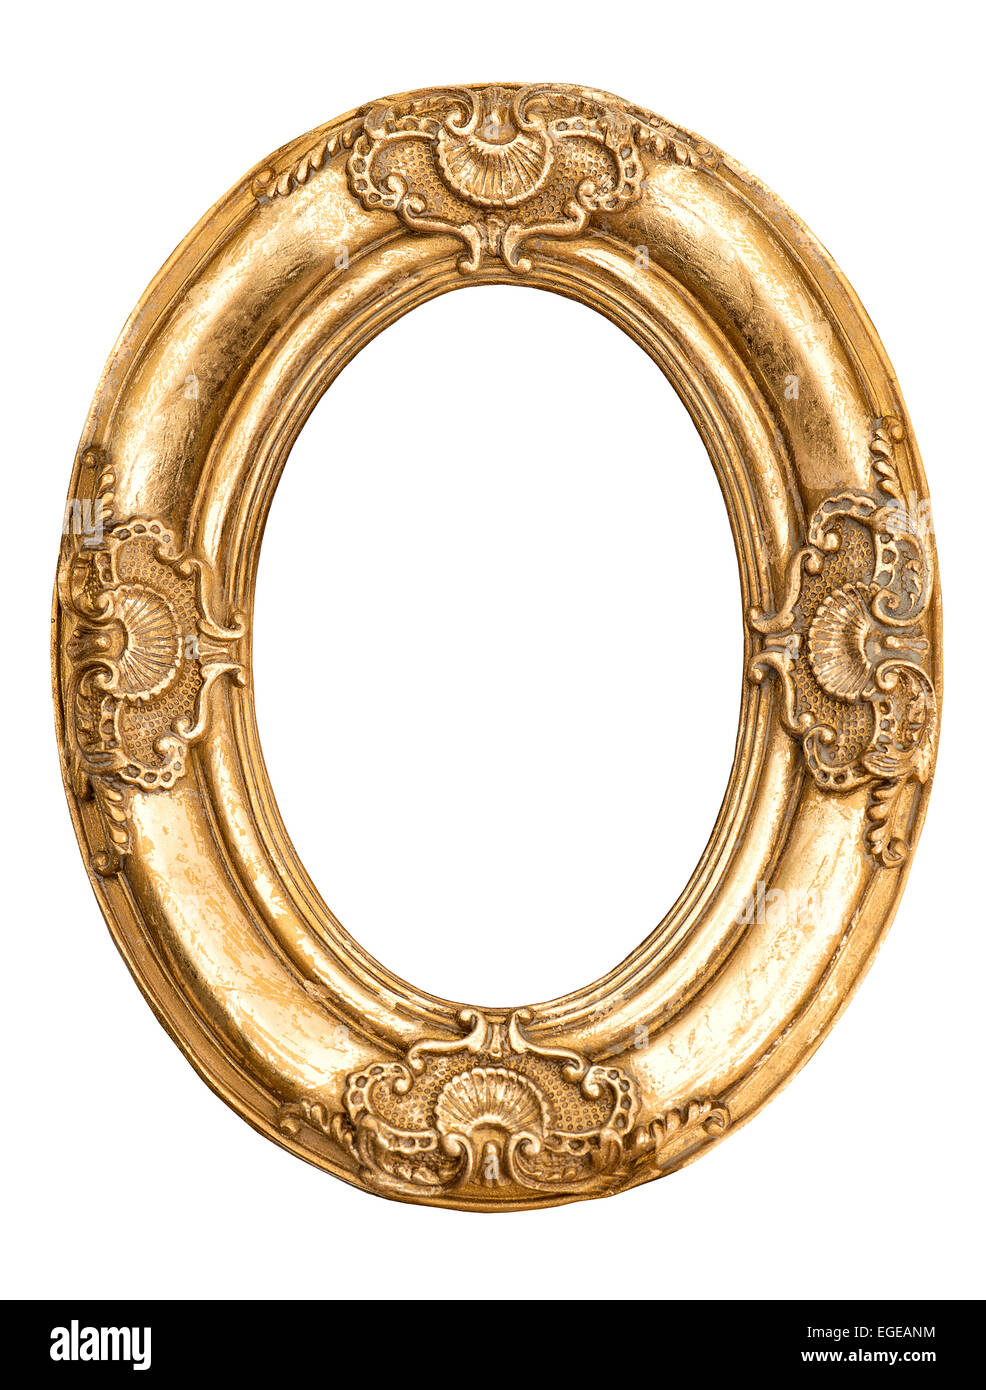 Ovaler Goldrahmen isoliert auf weiss. Barock-Stil Antik-Objekt. Stockfoto